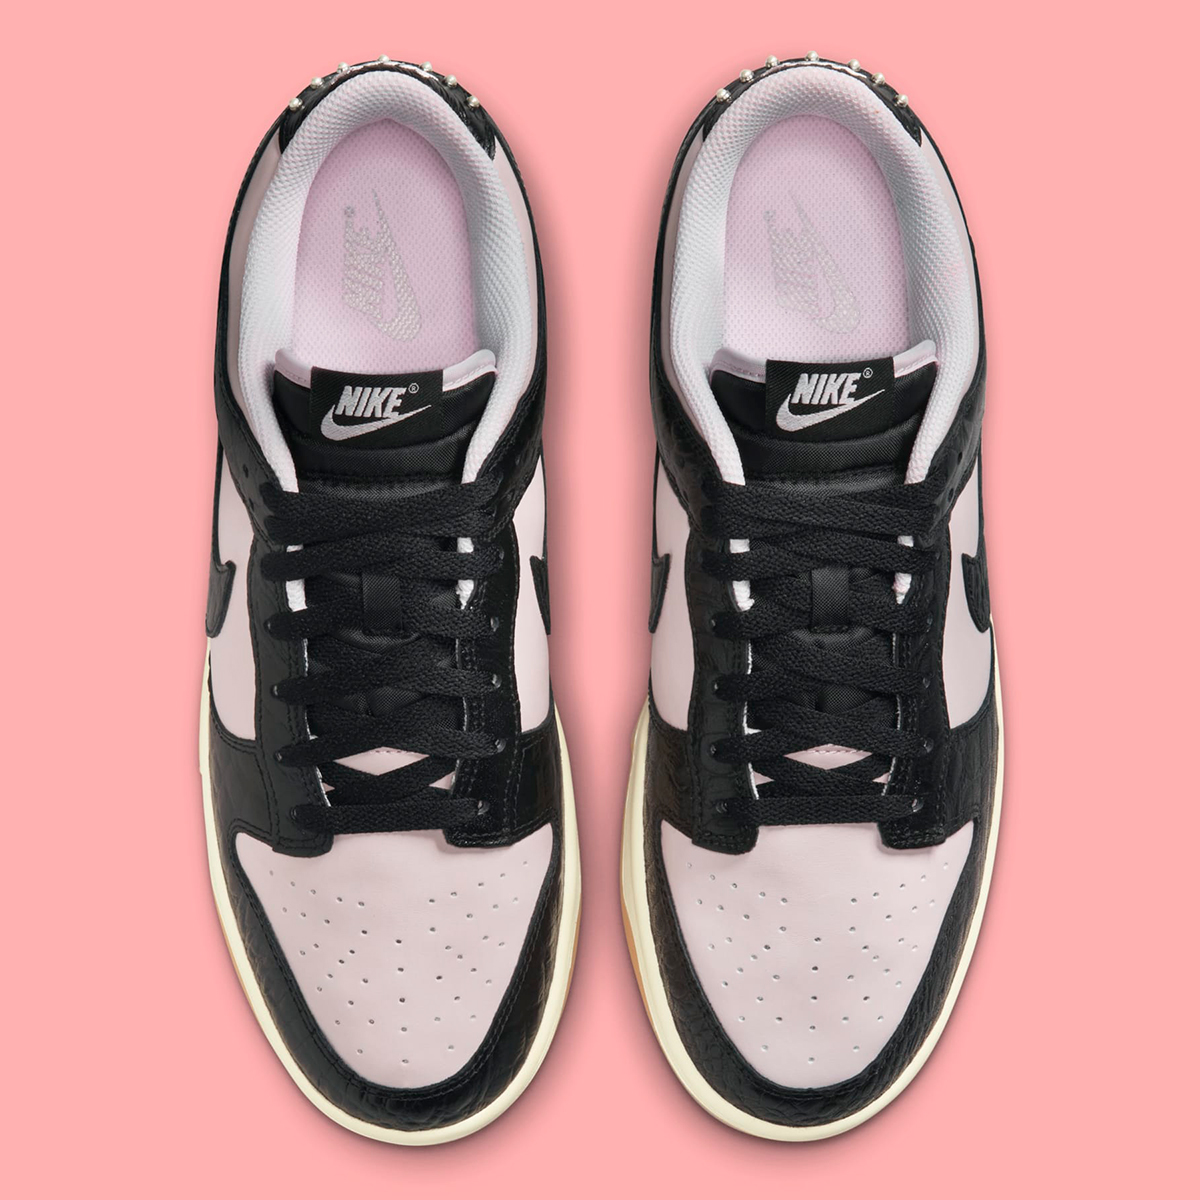 Nike Dunk Low Pink Oxford Croc Skin Gum Release Date 6